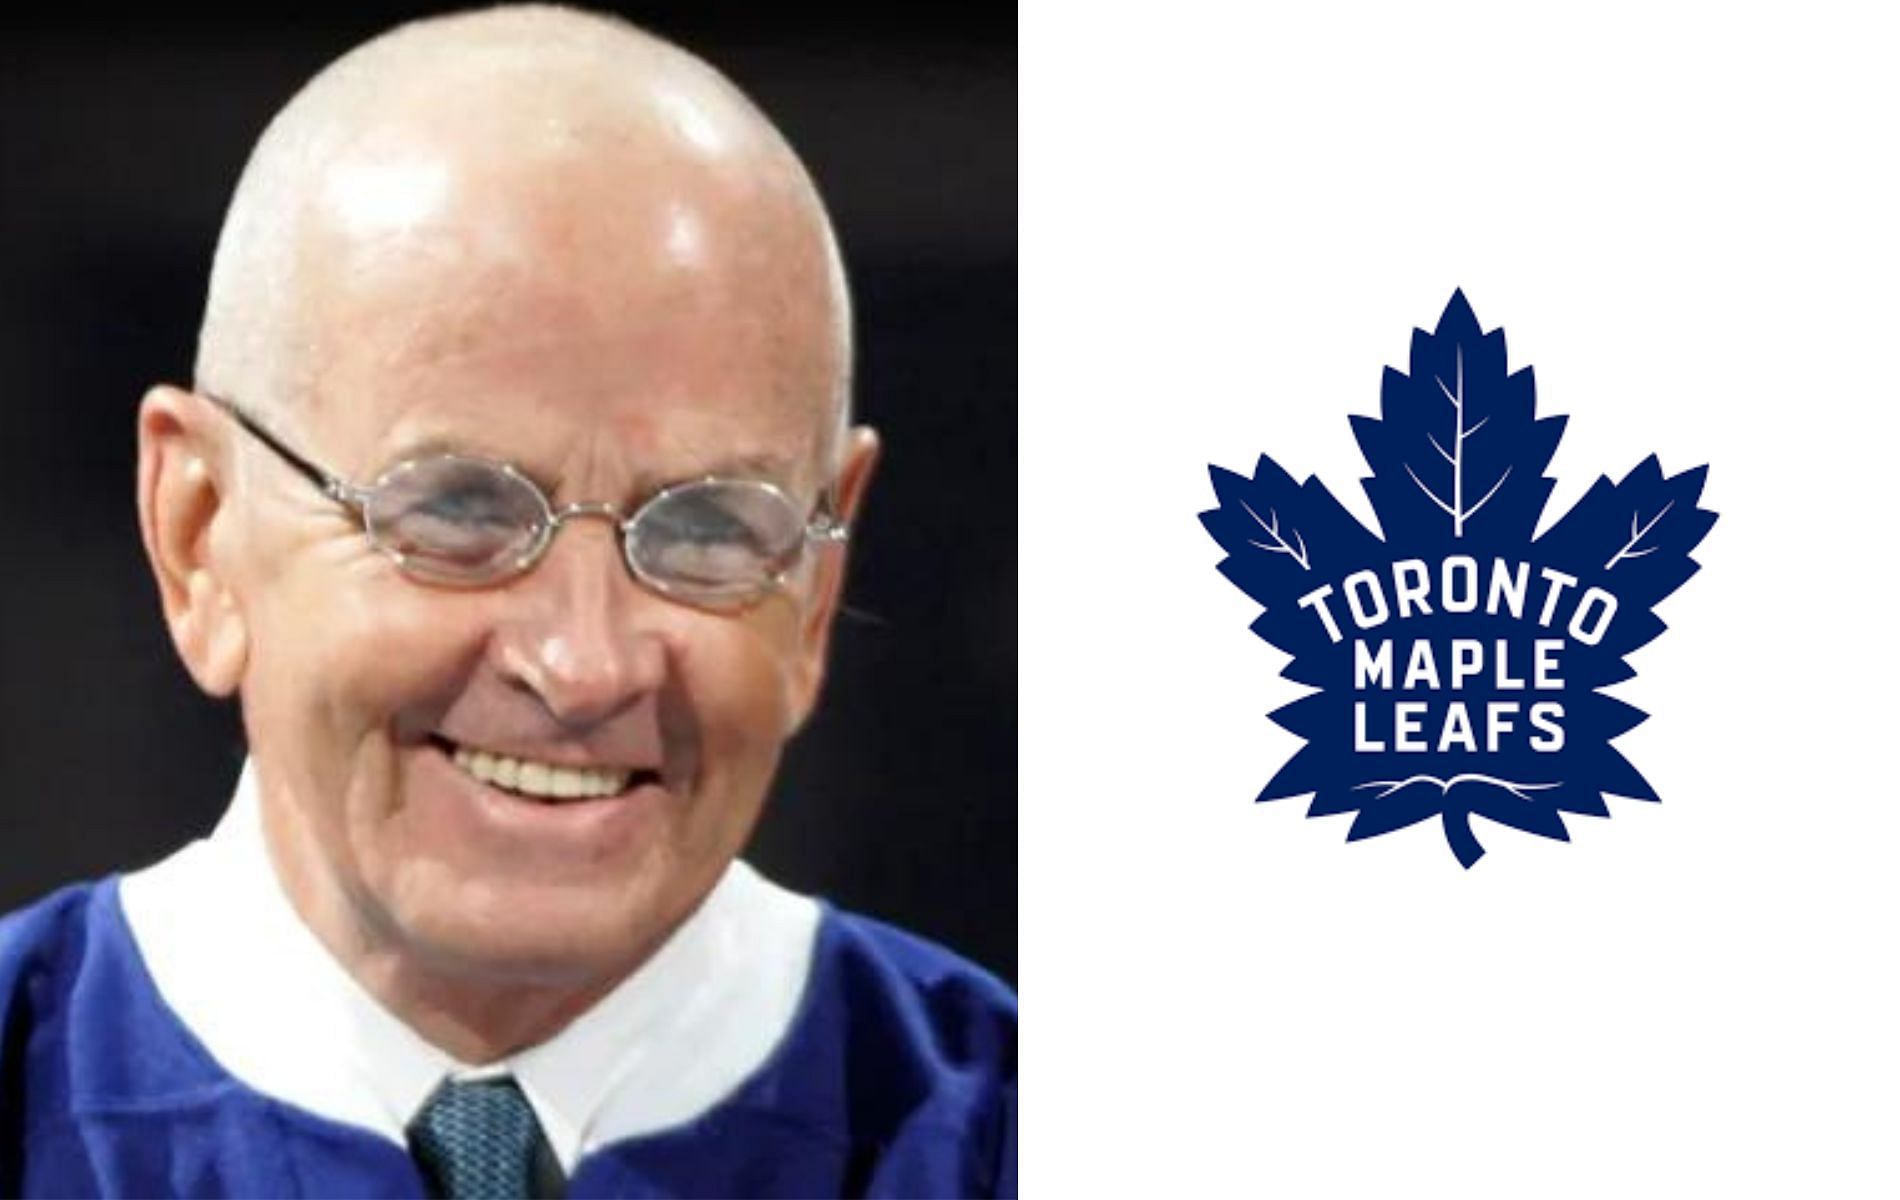 Toronto Maple Leafs legend Dave Keon hopeful of team